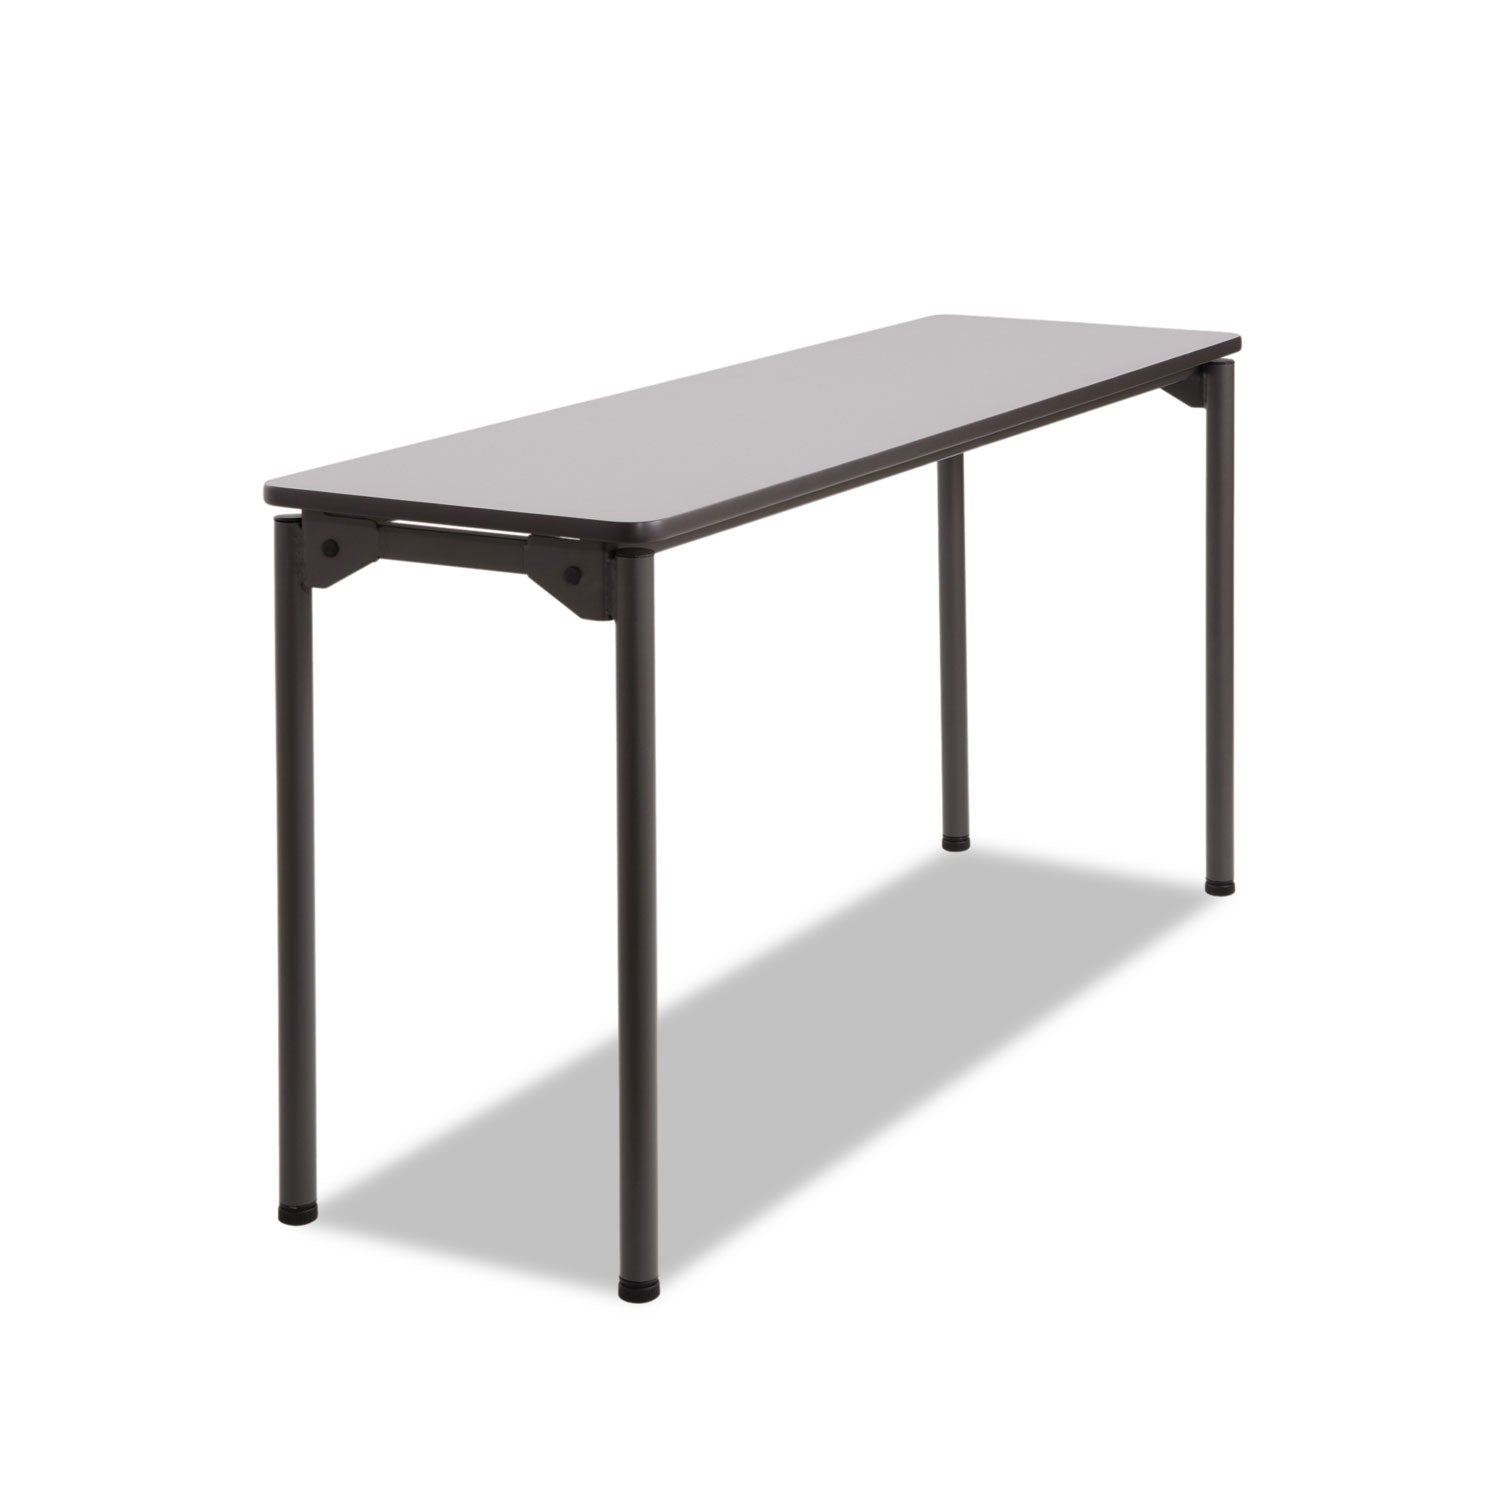 Maxx Legroom Wood Folding Table, Rectangular, 60" x 18" x 29.5", Gray/Charcoal - 